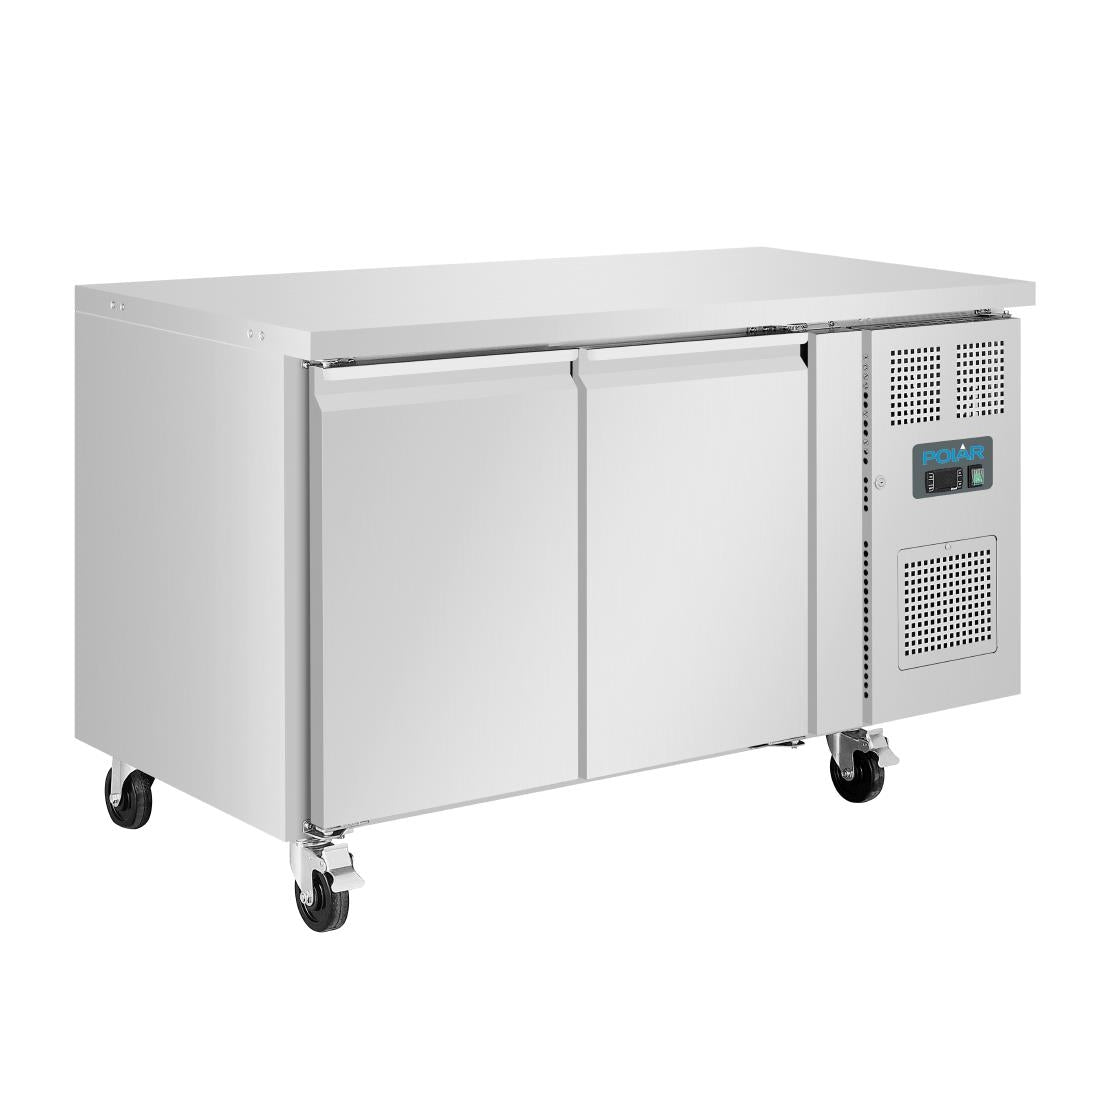 G599 Polar U-Series Double Door Counter Freezer 282Ltr JD Catering Equipment Solutions Ltd